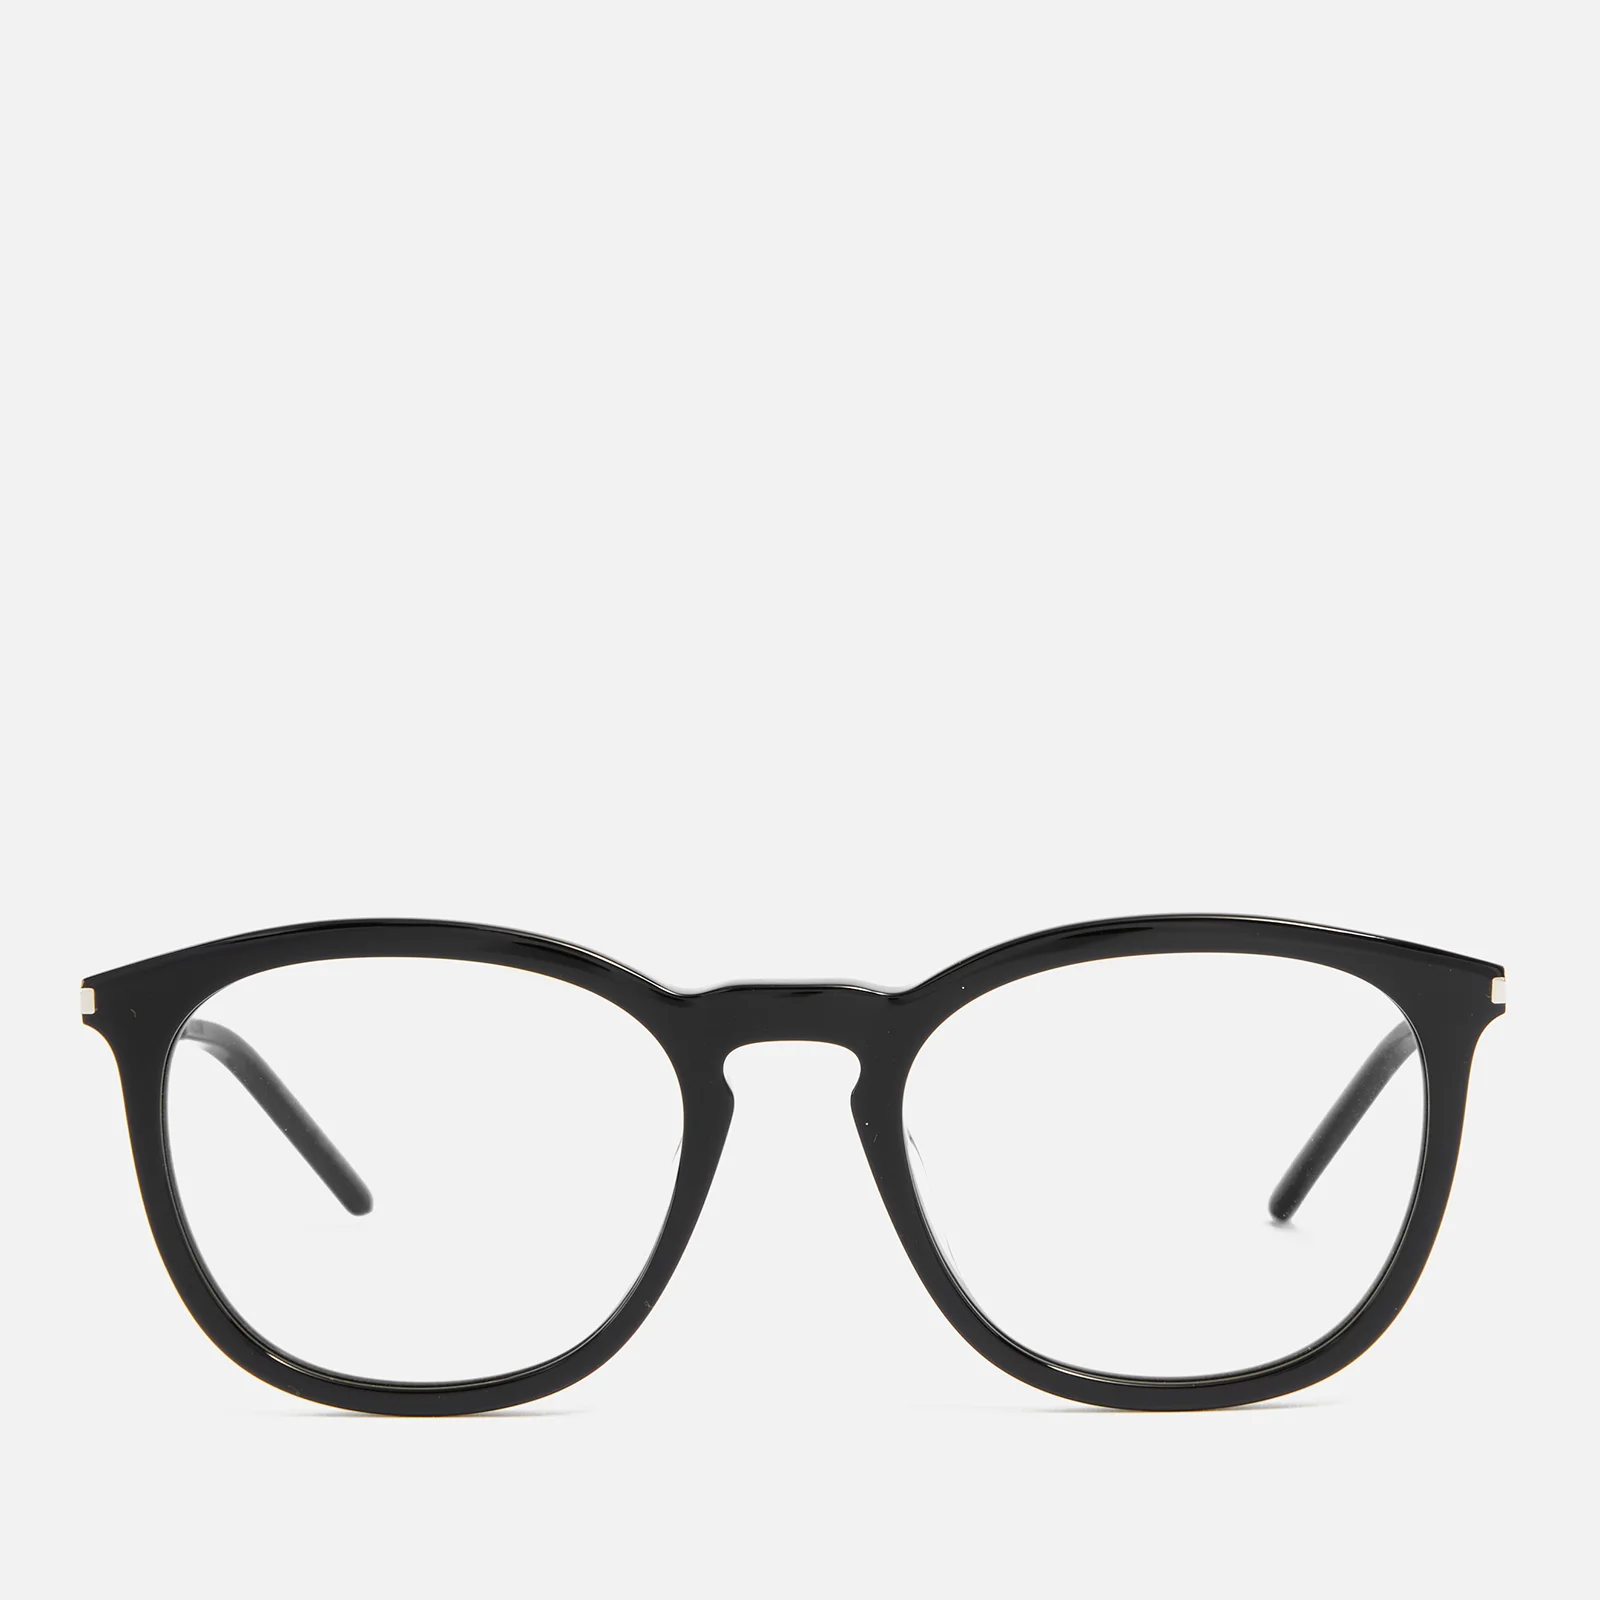 Saint Laurent D-Frame Acetate and Silver-Tone Metal Optical Glasses Image 1